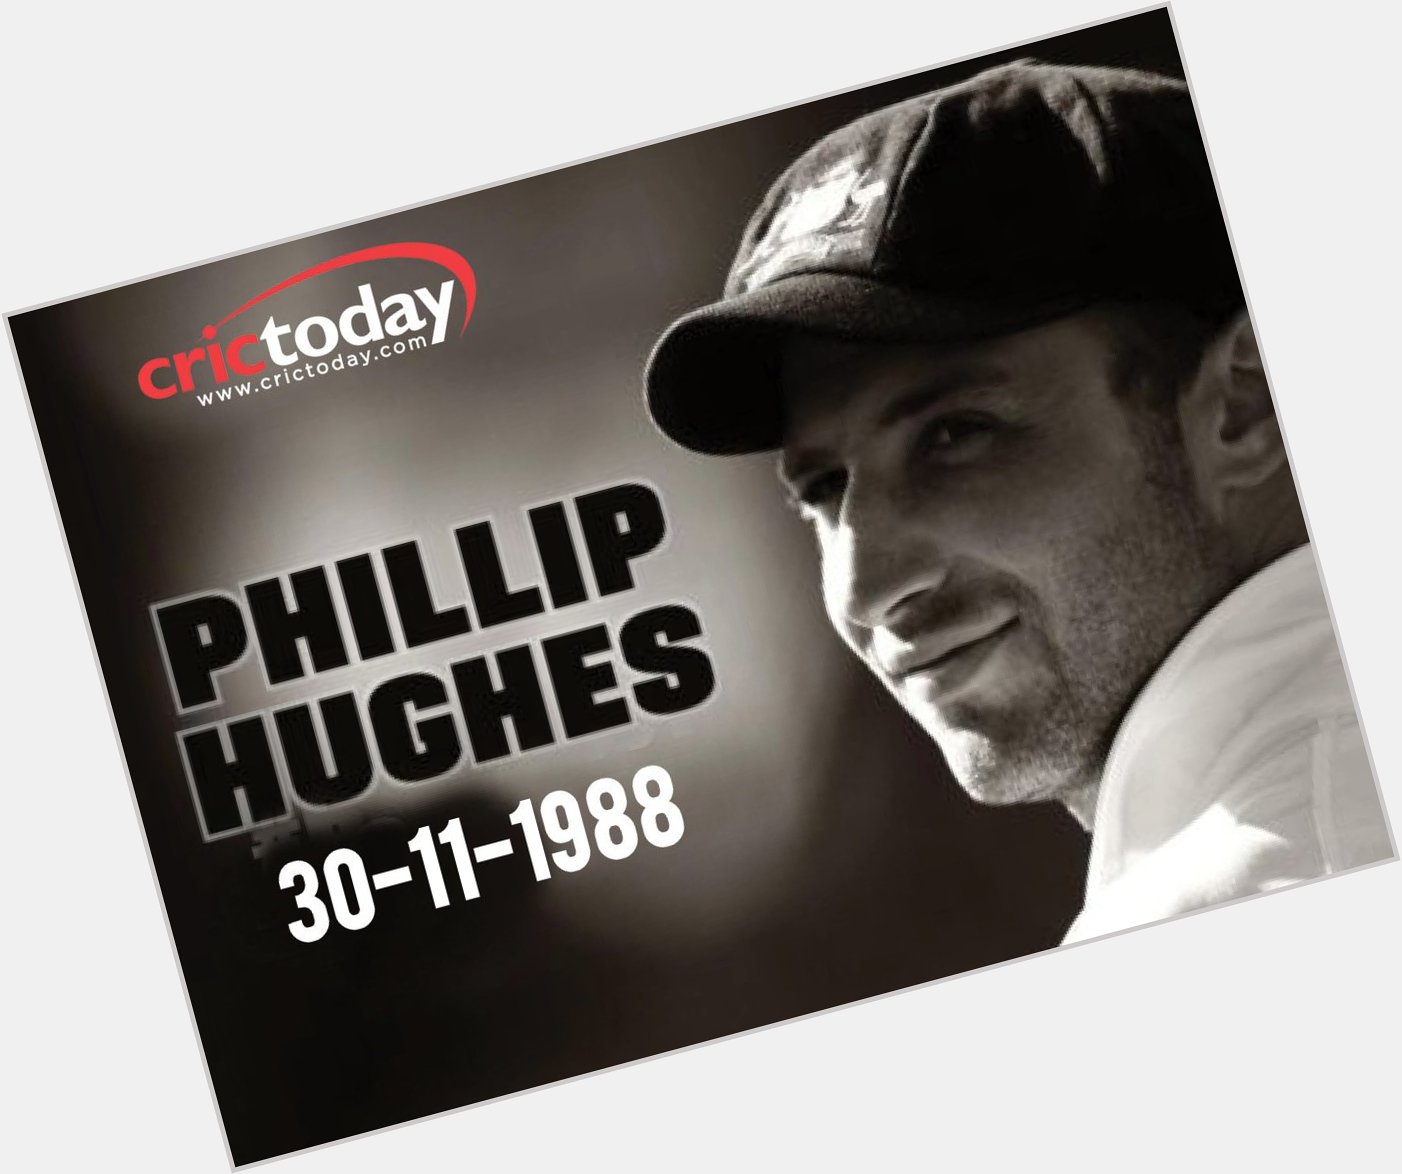 Happy Birthday, Phillip Hughes, wherever you are 